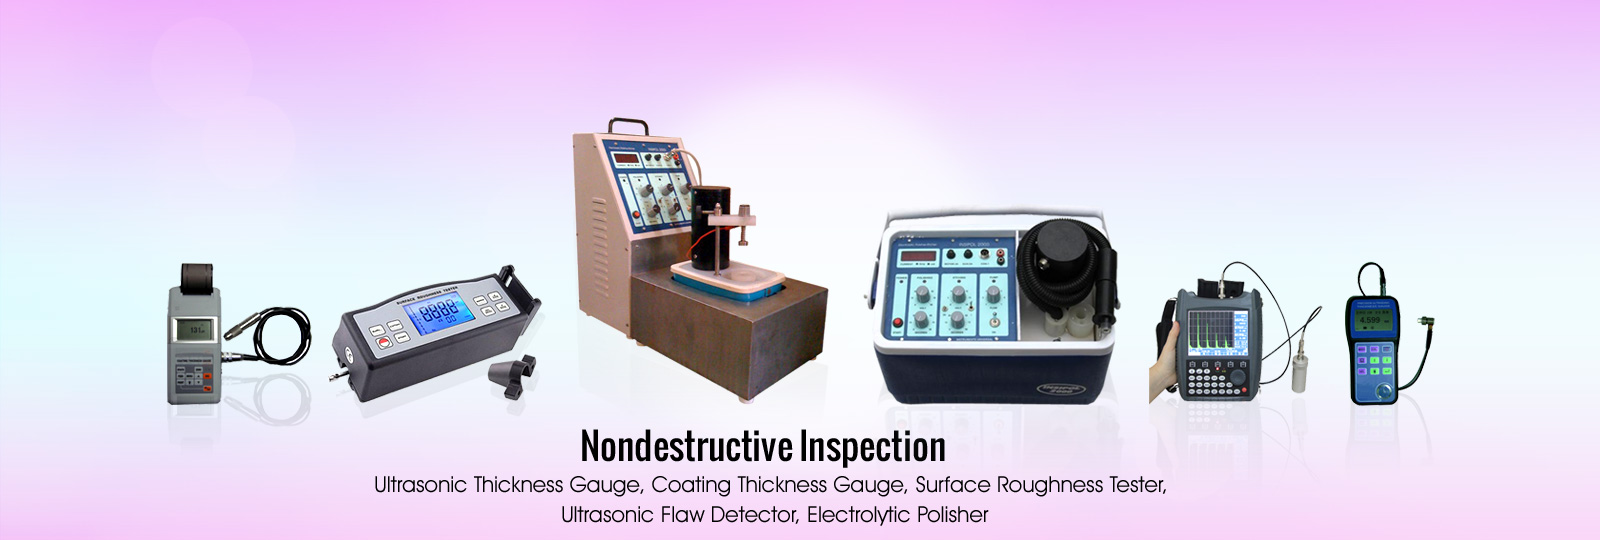 Nondestructive Inspection Instruments (NDT)